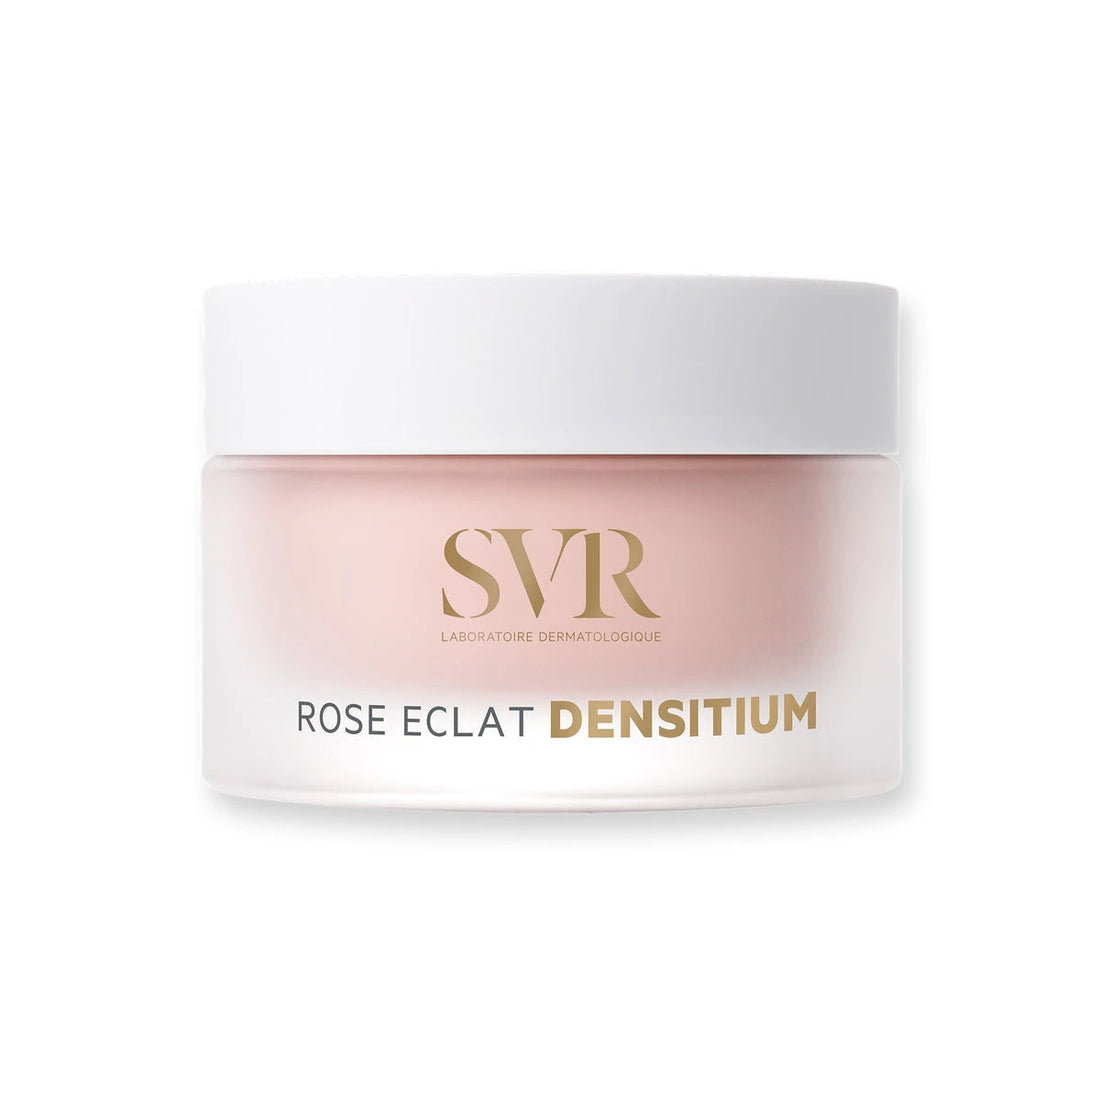 SVR Densitium crema eclat de rosa 50ml